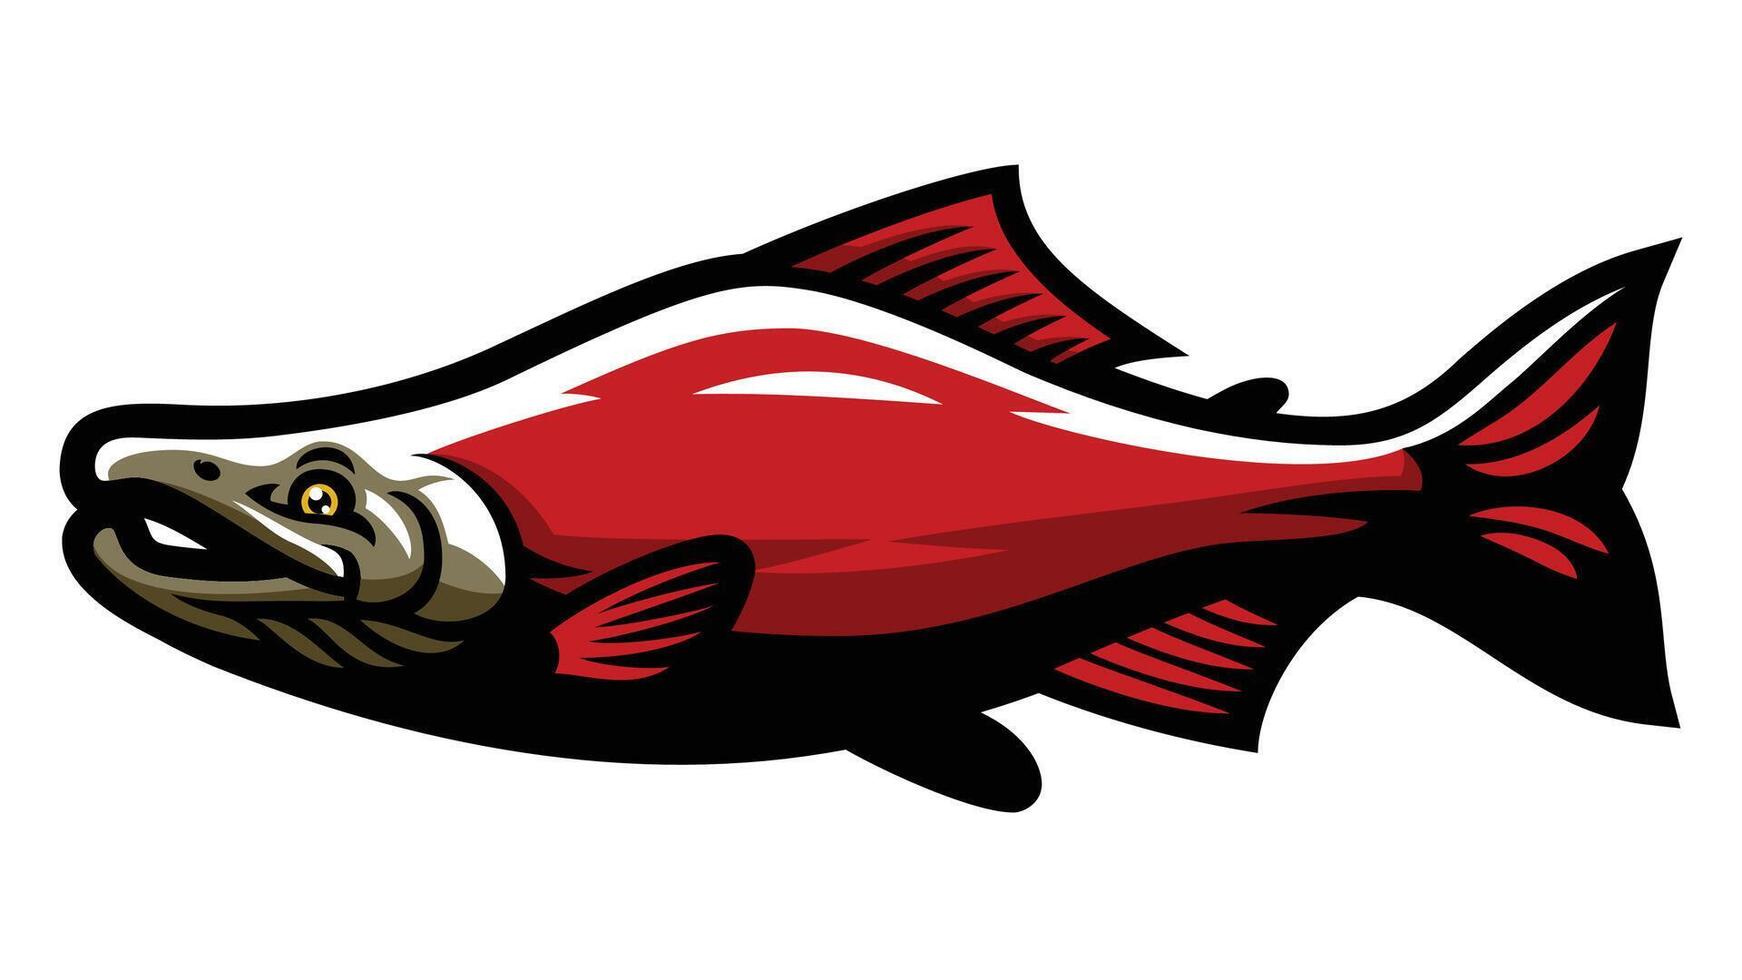 Sockeye Salmon Fish Mascot Illustration vector